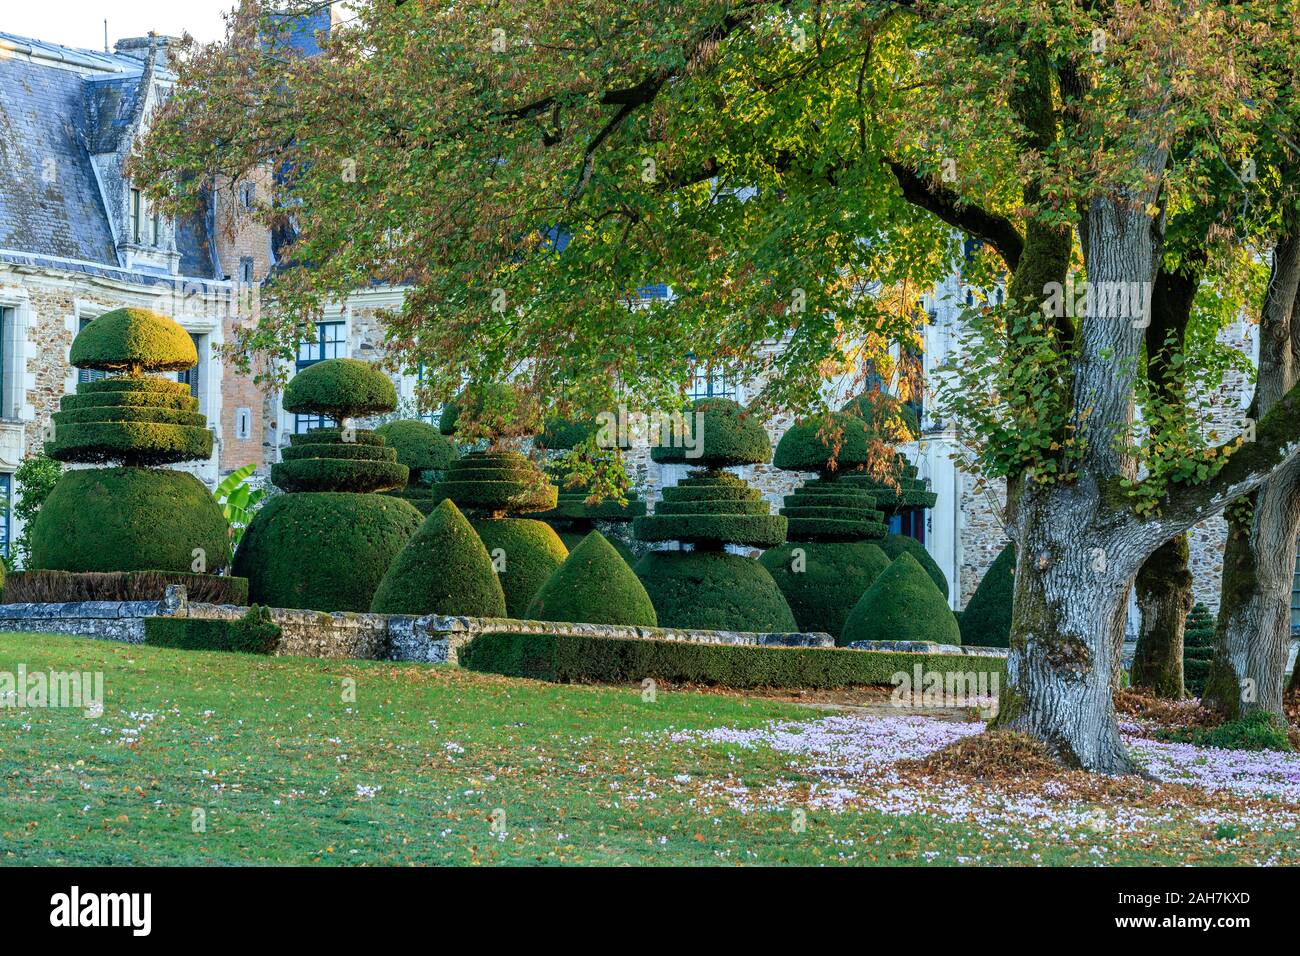 France, Maine et Loire, Champtoce sur Loire, Chateau du Pin gardens, yews cut in topiary // France, Maine-et-Loire (49), Champtocé-sur-Loire, jardins Stock Photo